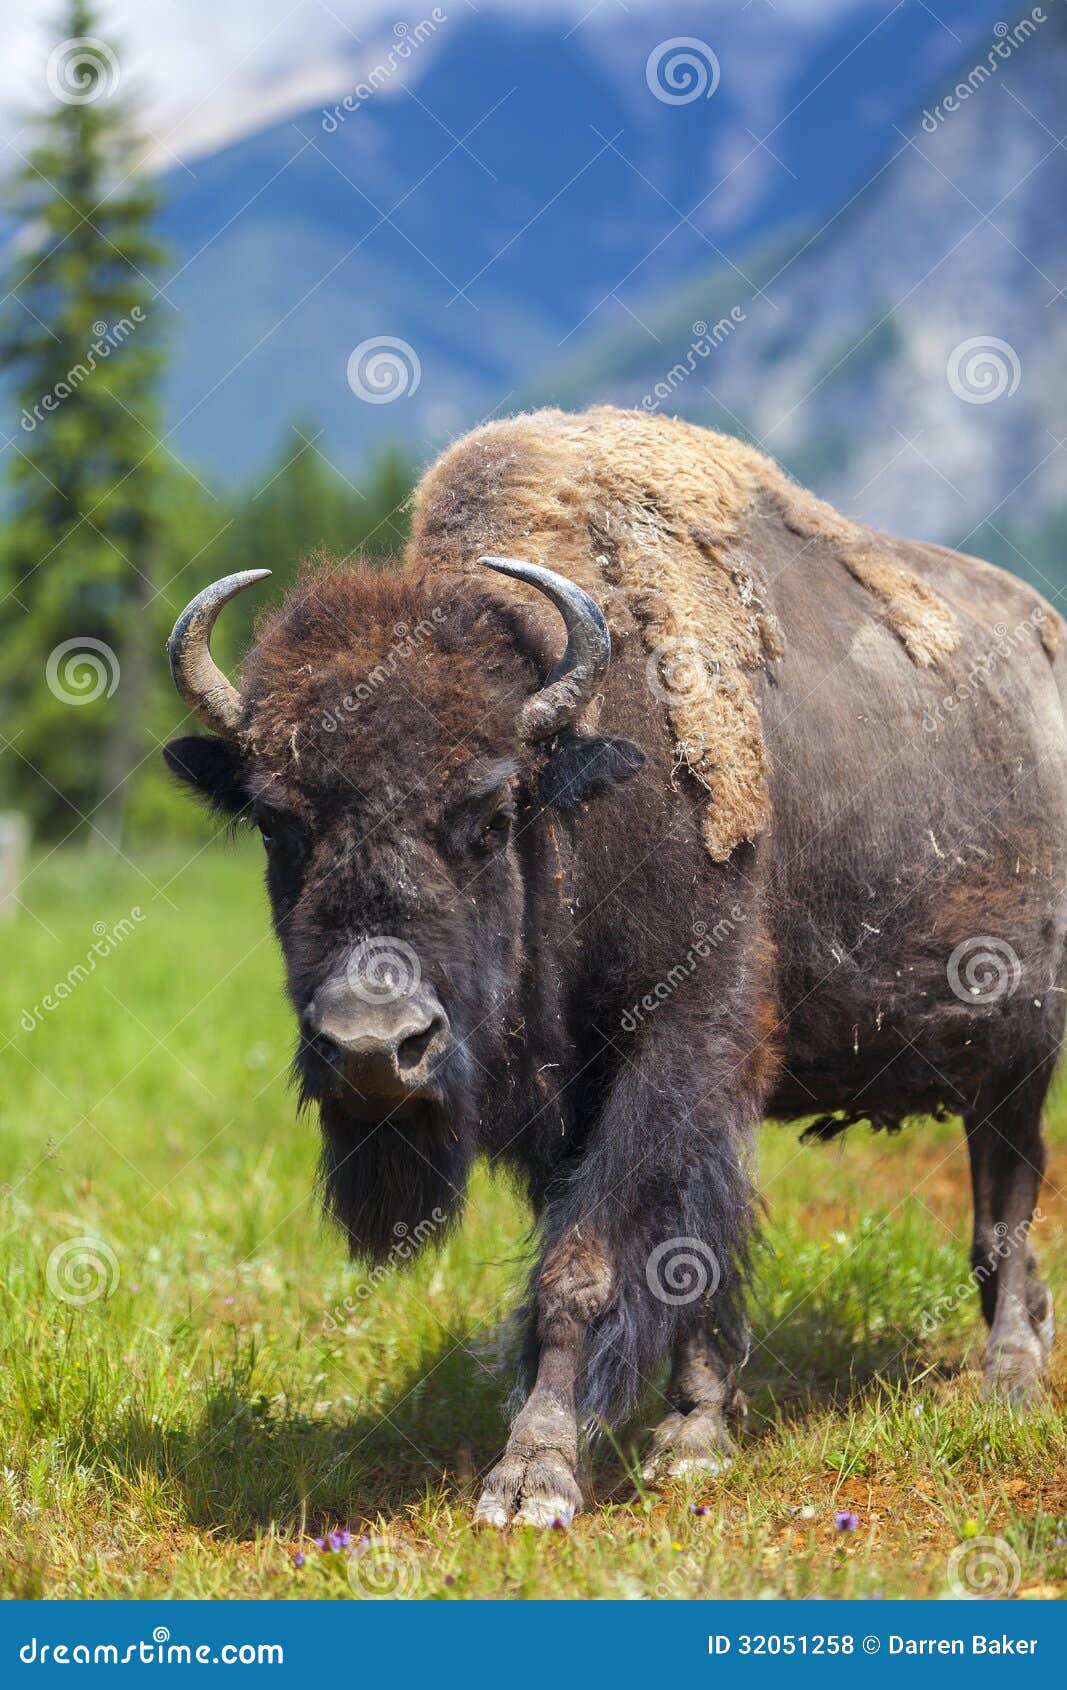 american bison or buffalo